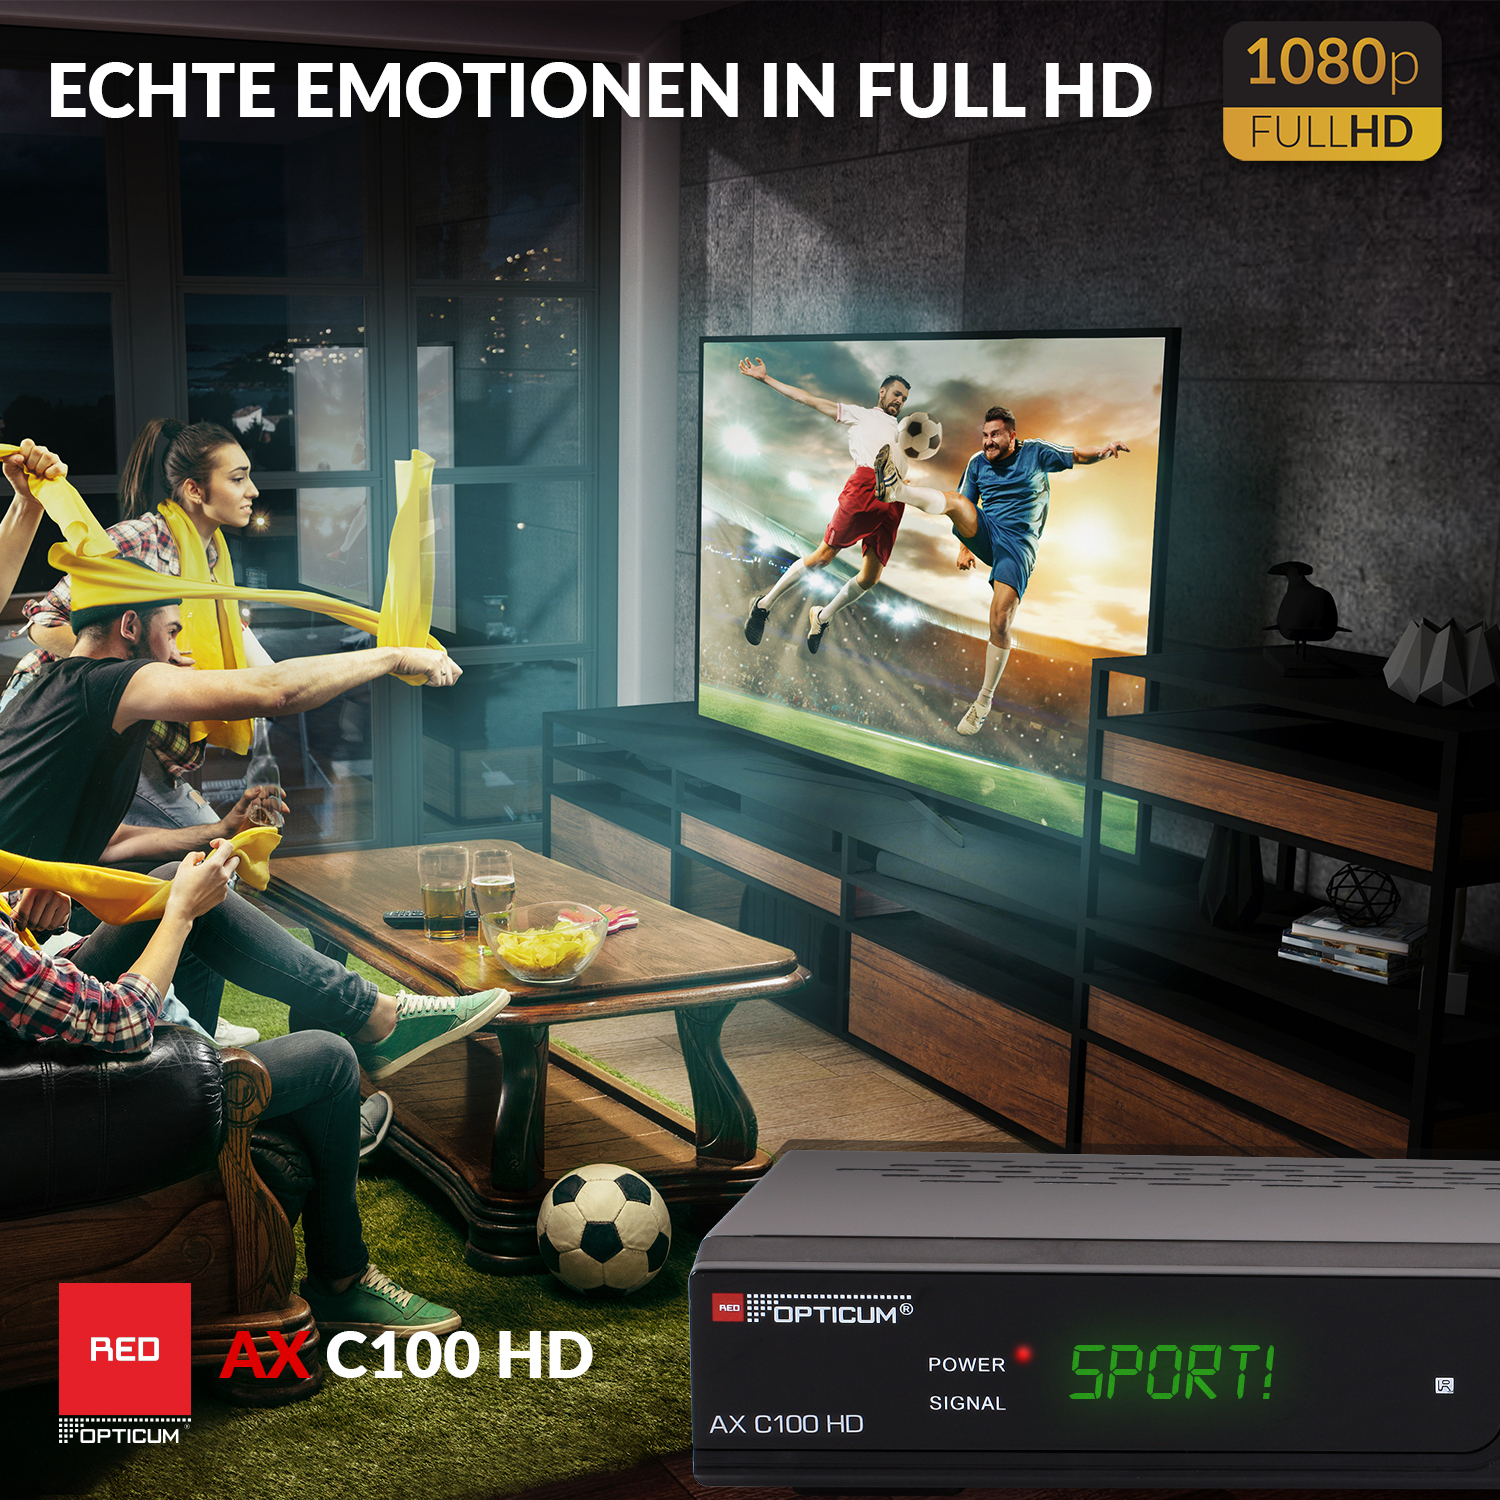 C100 HD AX OPTICUM DVB-C2, DVB-C, RED schwarz) DVB-C Receiver (HDTV,